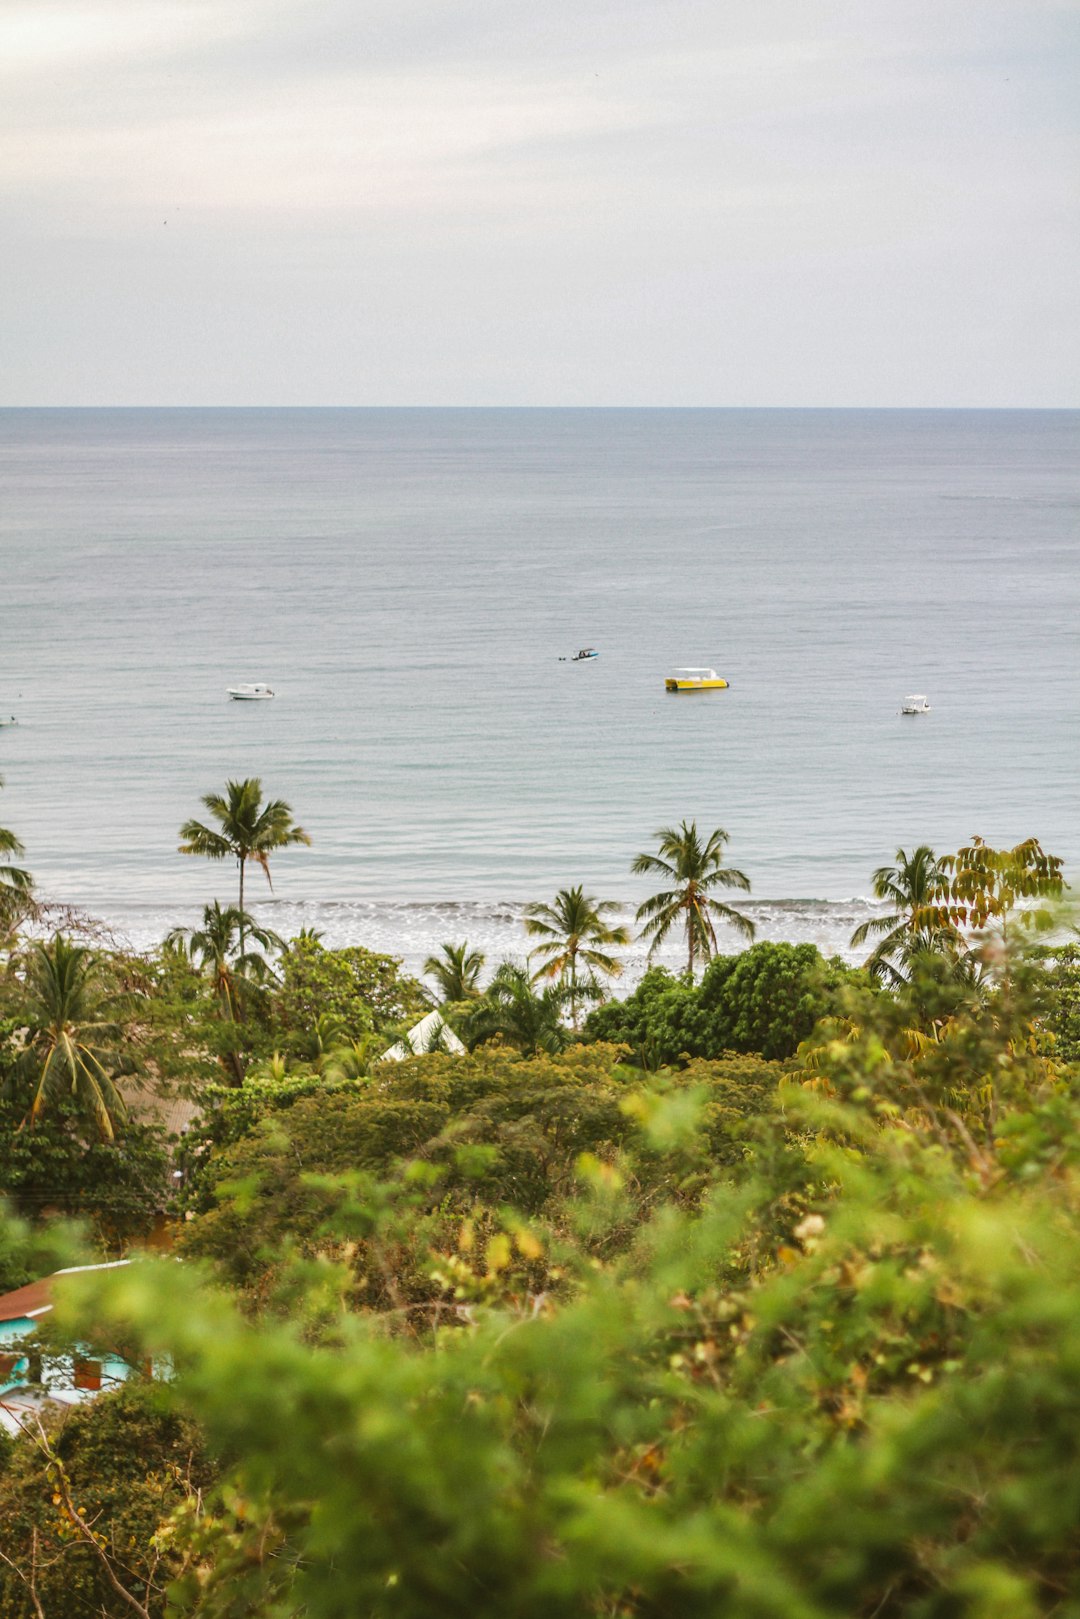 Travel Tips and Stories of Samara Beach in Costa Rica